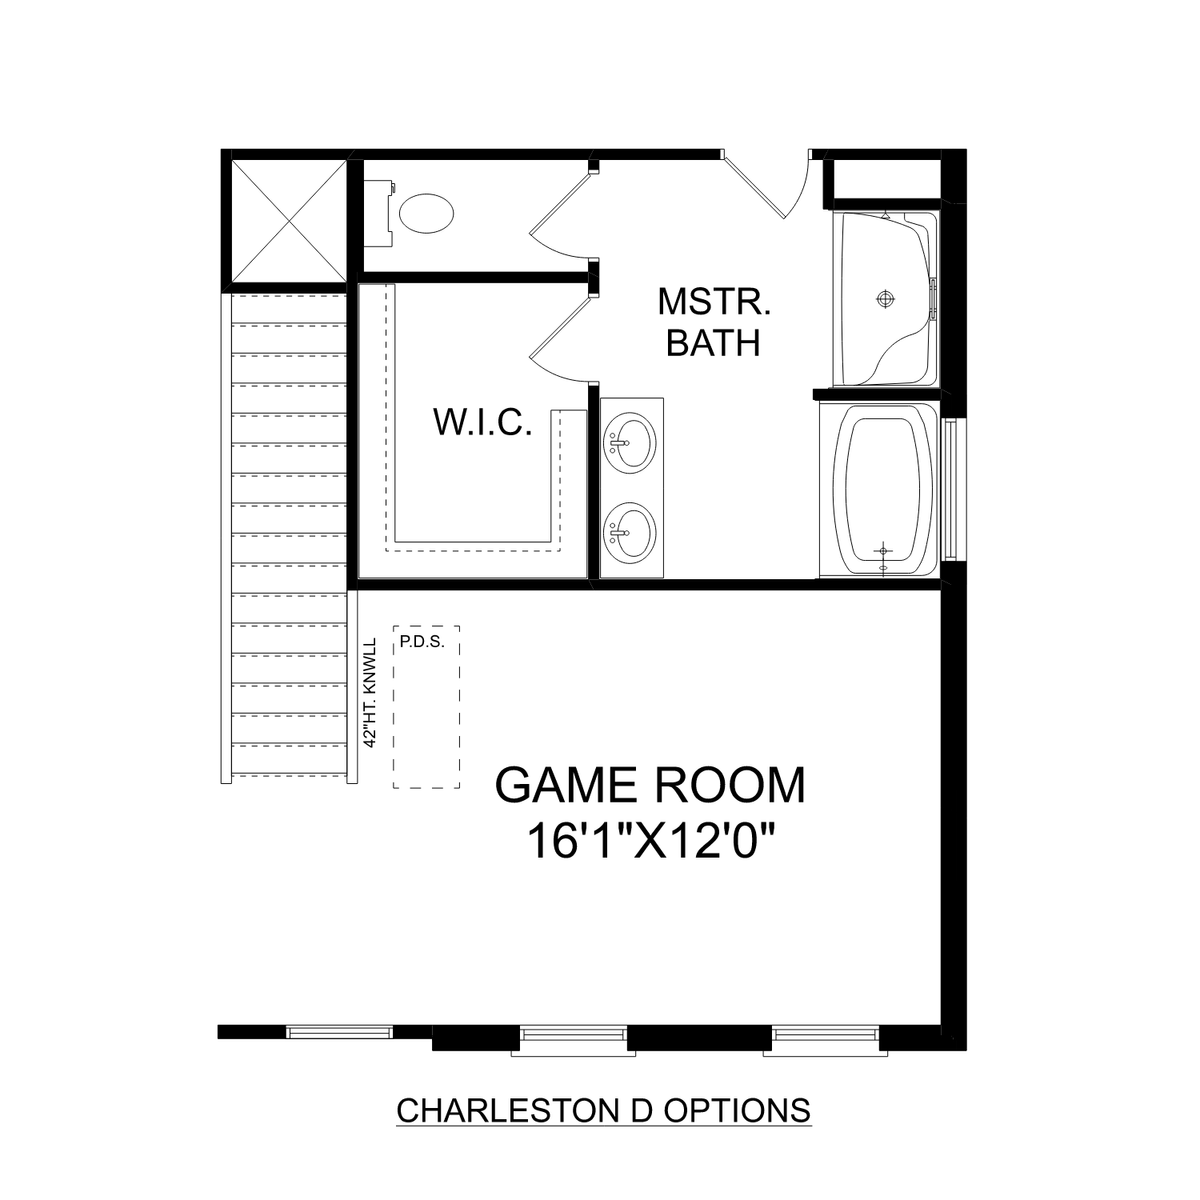 3 - The Charleston D buildable floor plan layout in Davidson Homes' Watts Glen community.